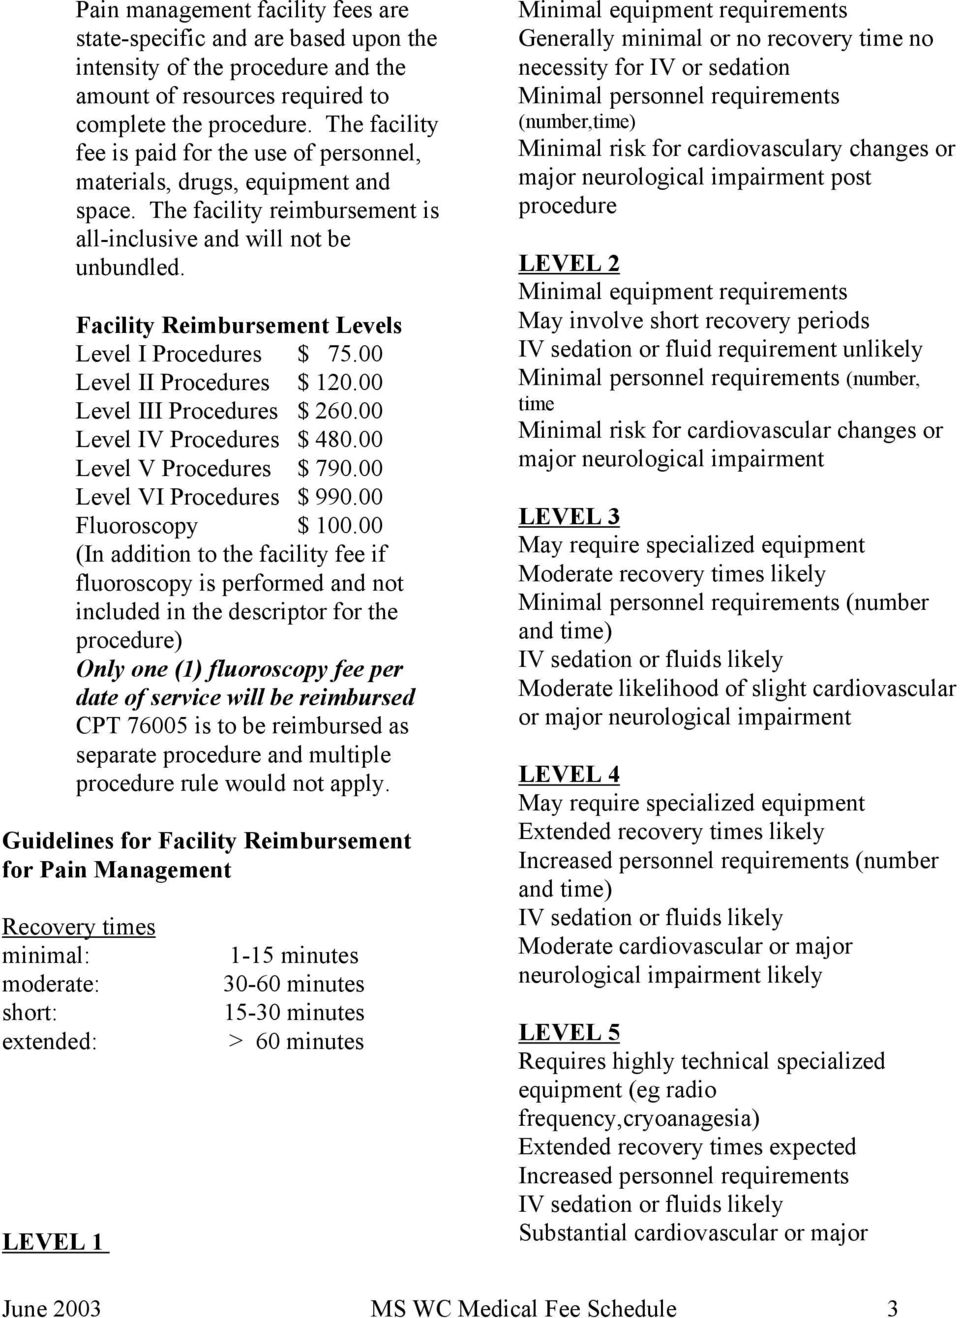 Facility Reimbursement Levels Level I Procedures $ 75.00 Level II Procedures $ 120.00 Level III Procedures $ 260.00 Level IV Procedures $ 480.00 Level V Procedures $ 790.00 Level VI Procedures $ 990.